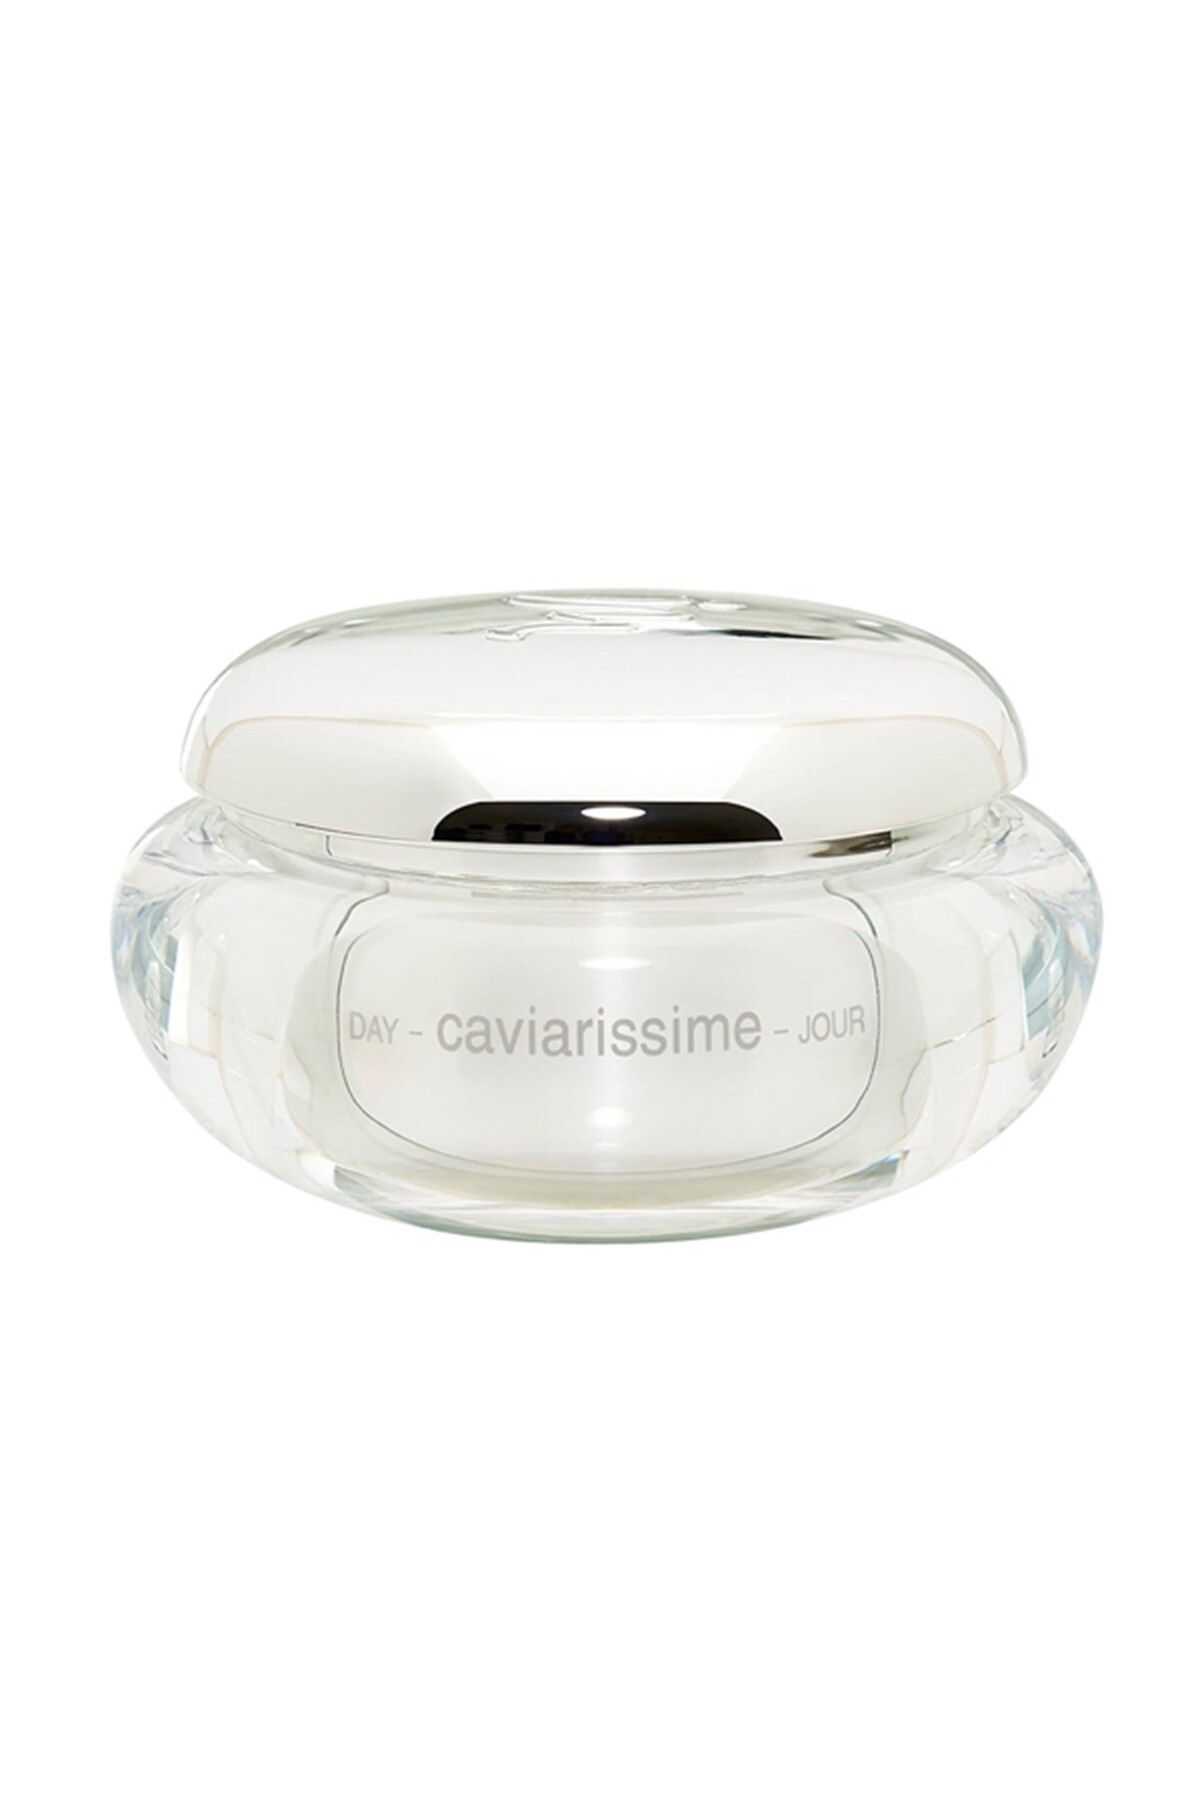 INGRID MILLET Perle De Caviar Caviarissime Jour Anti-wrinkle Revitalising Cream 50ml